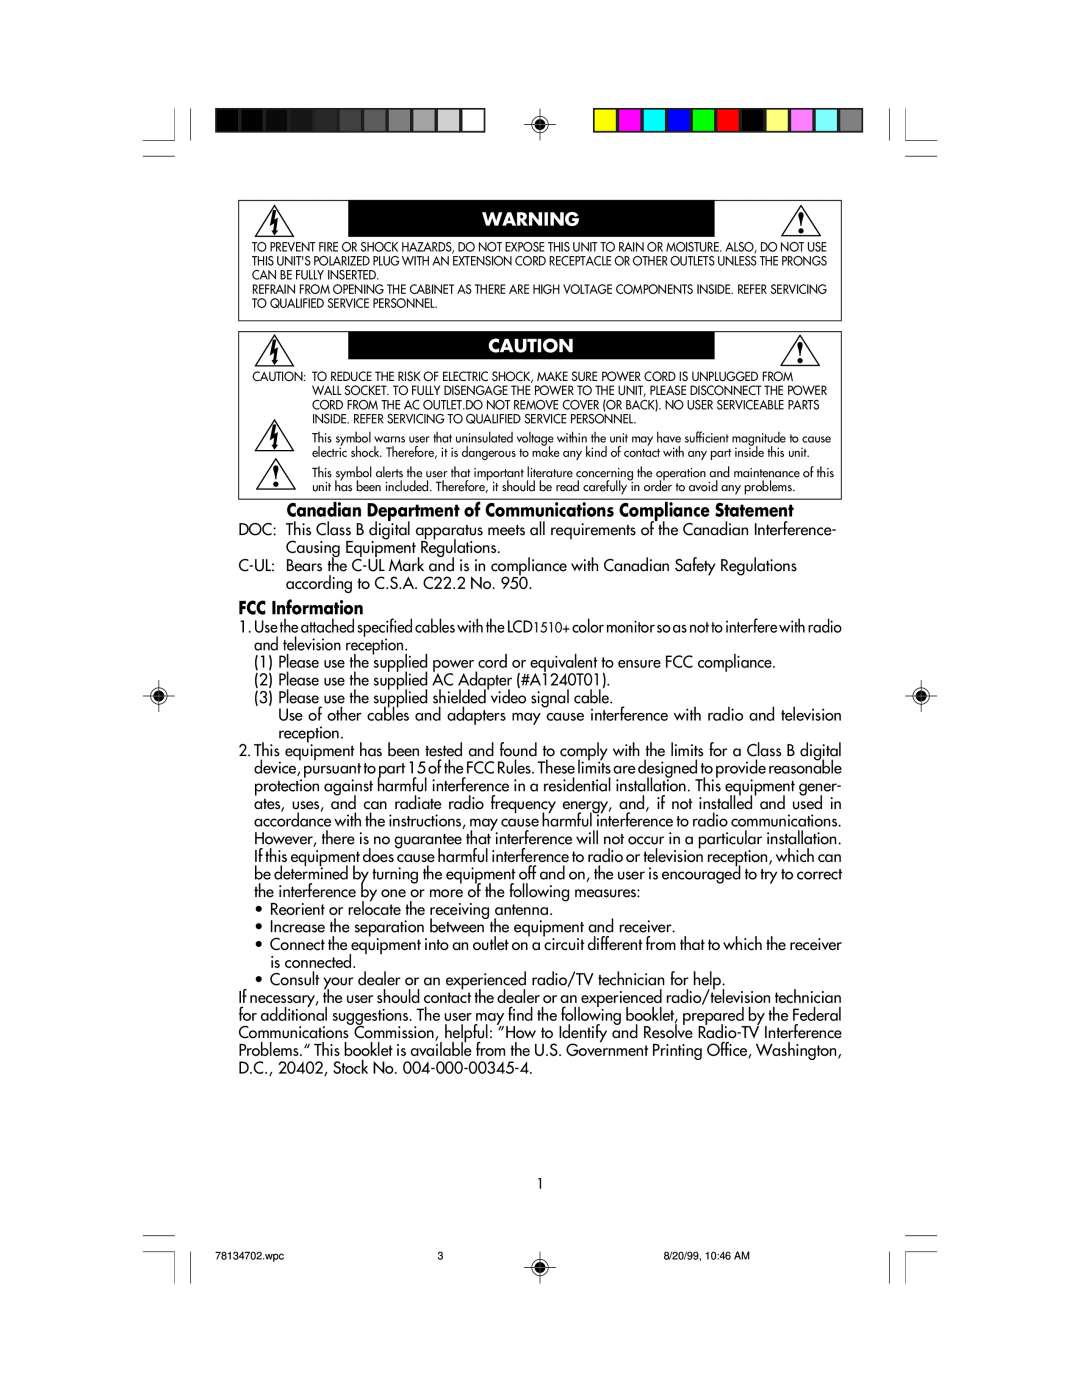 NEC LCD1510+ user manual FCC Information 